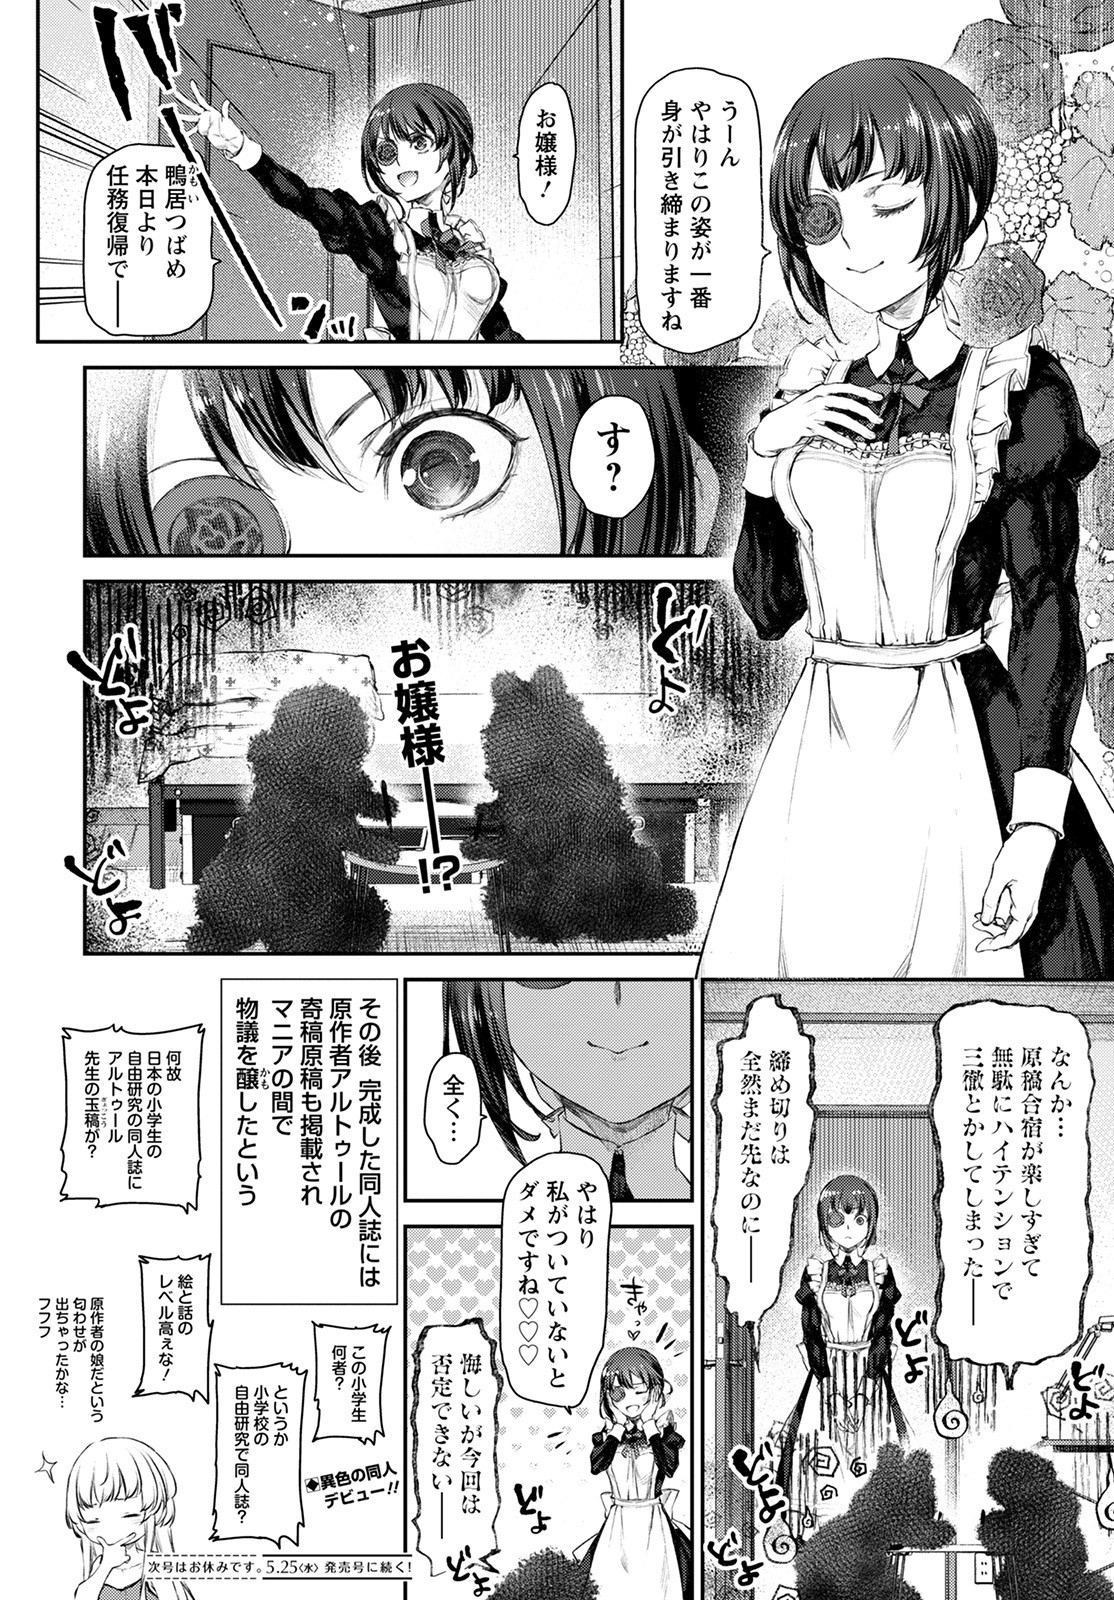 Uchi no Maid ga Uzasugiru! - Chapter 52 - Page 26